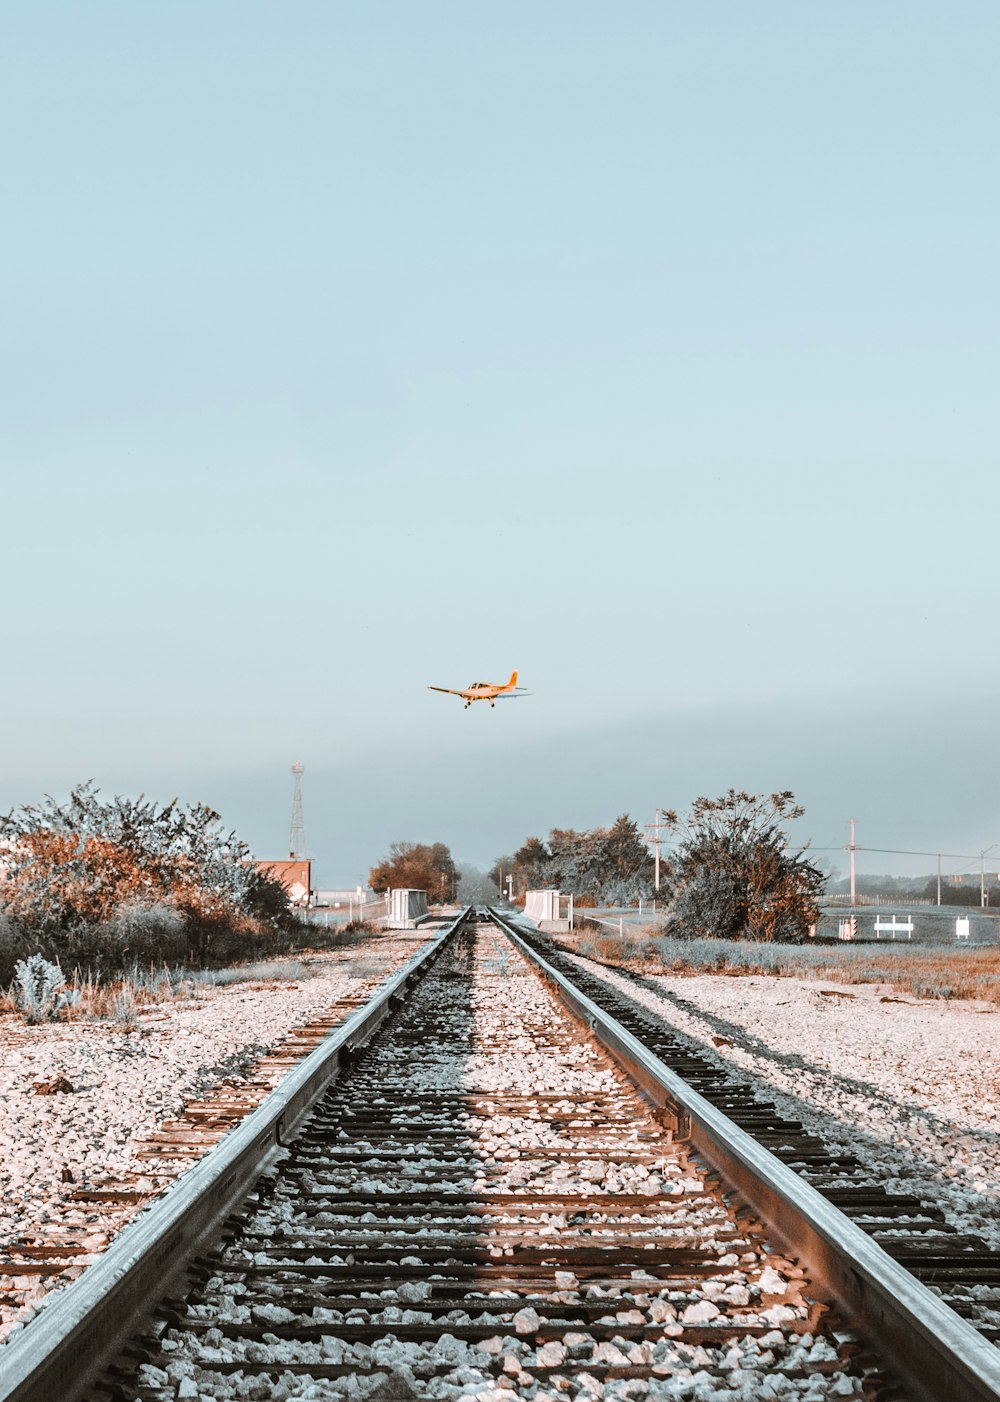 monoplano laranja voando acima de uma ferrovia